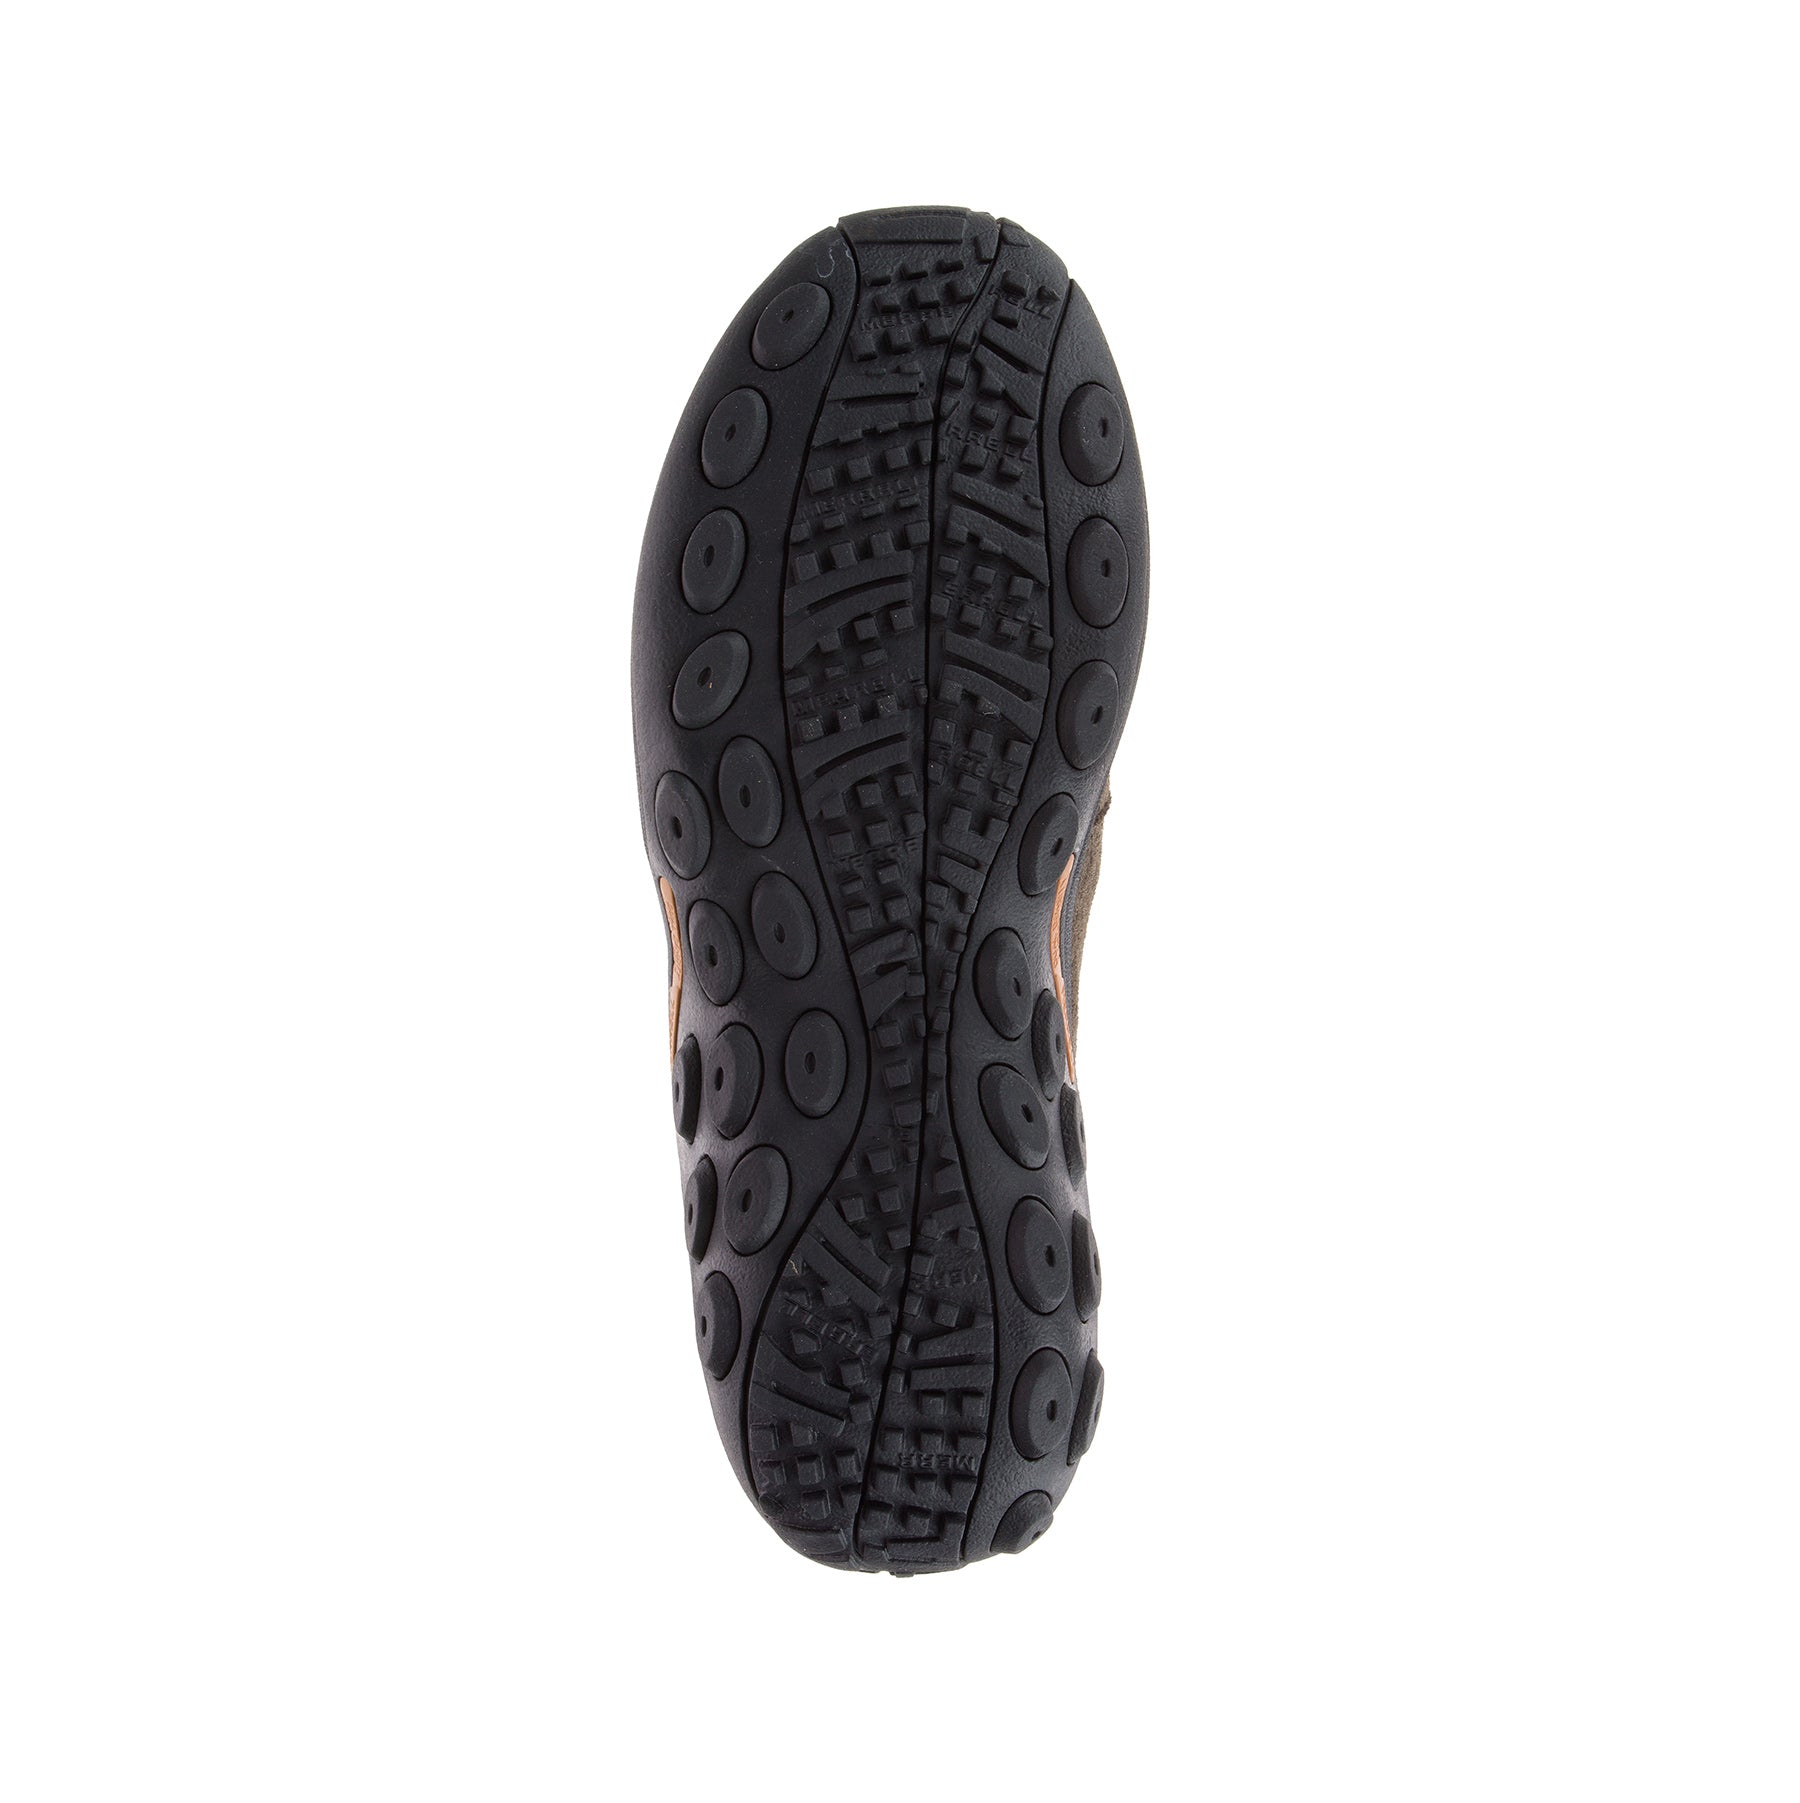 merrell jungle moc slip on shoe mens bottom view in brown